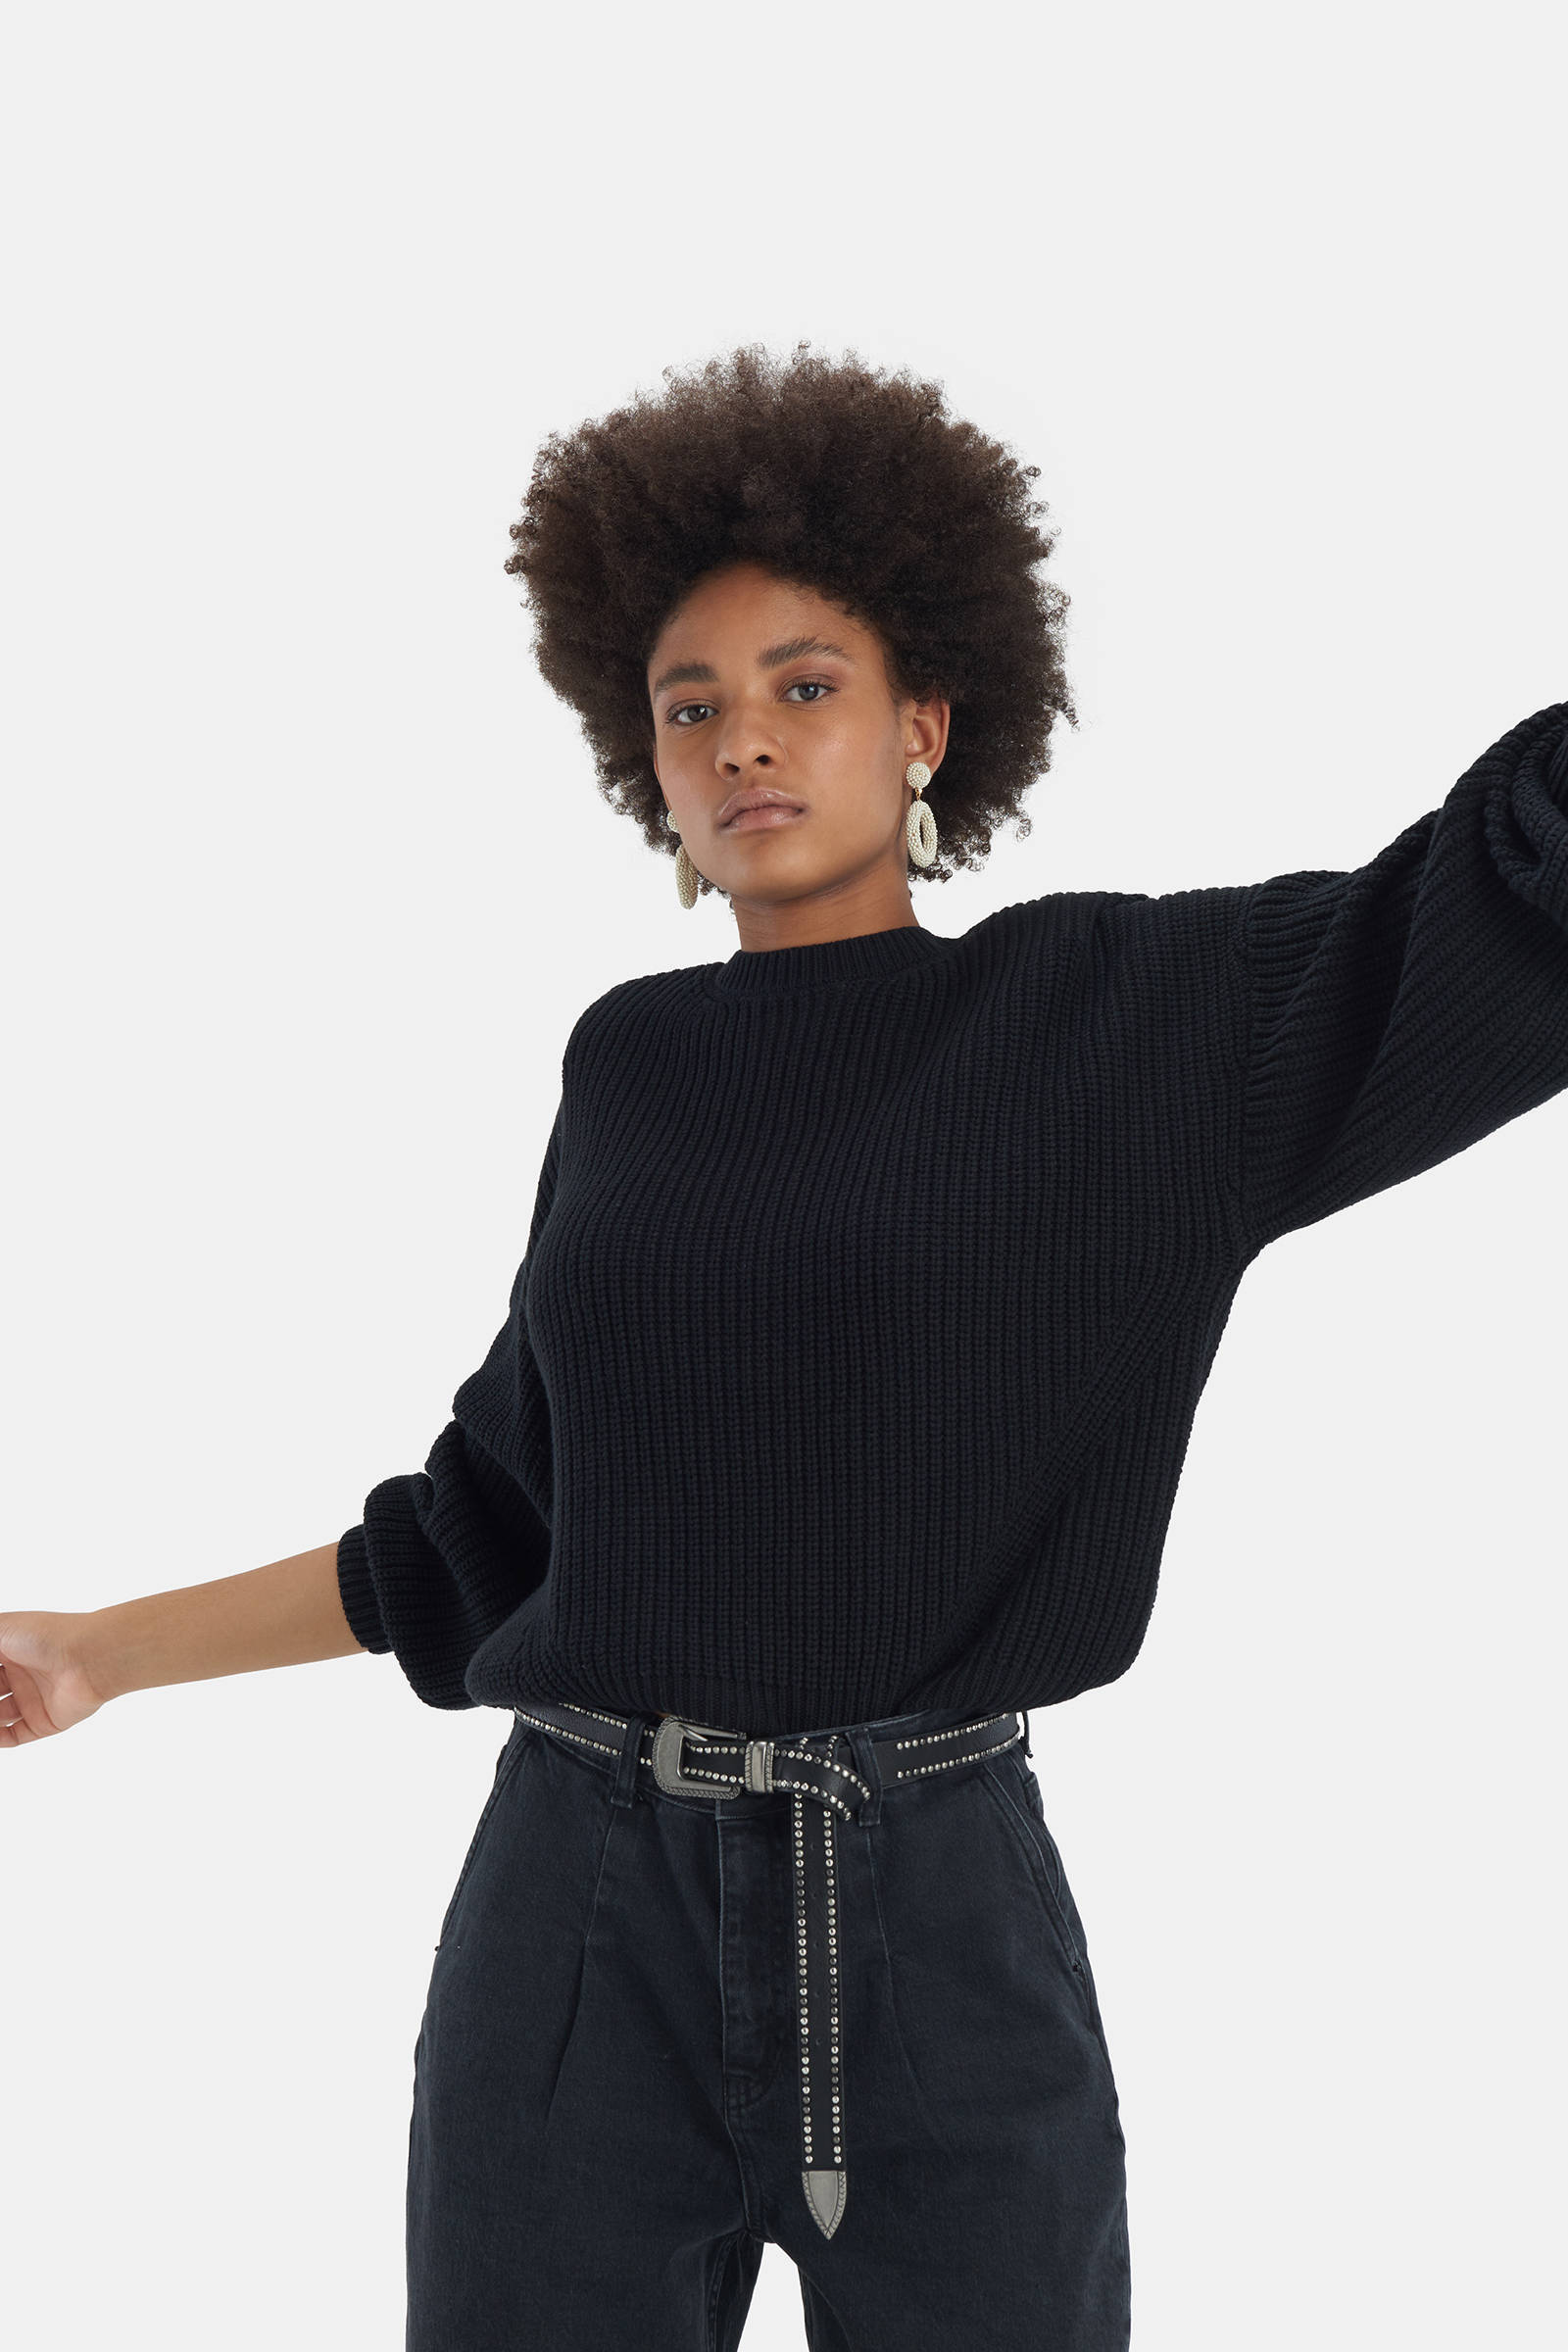 Kleding Dameskleding Sweaters Pullovers Olivia Van Boven 